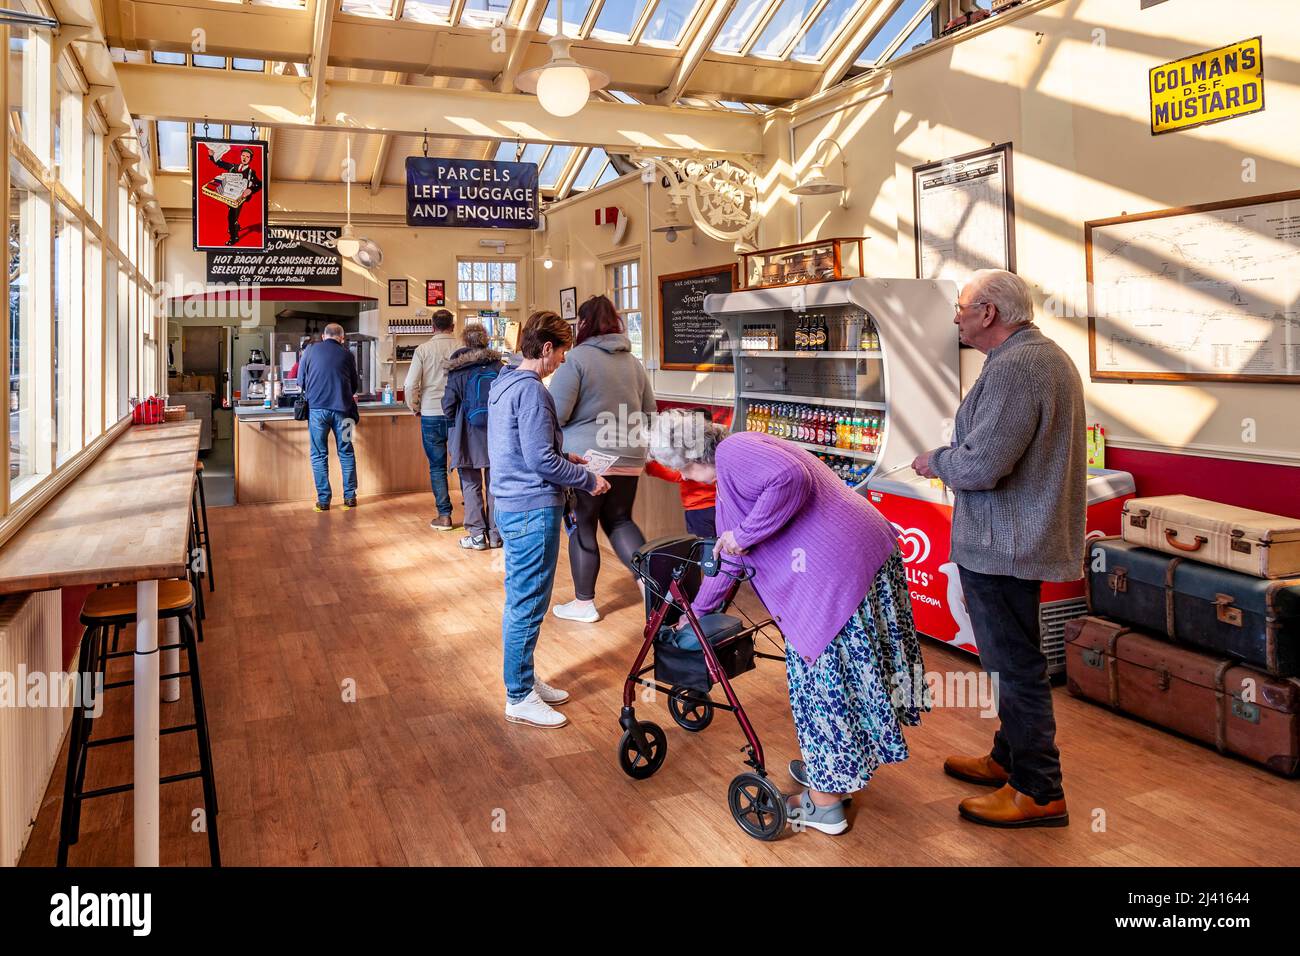 Sheringham station cafe, North Norfolk Railway – The Poppy Line, East Anglia, England, UK Stock Photo